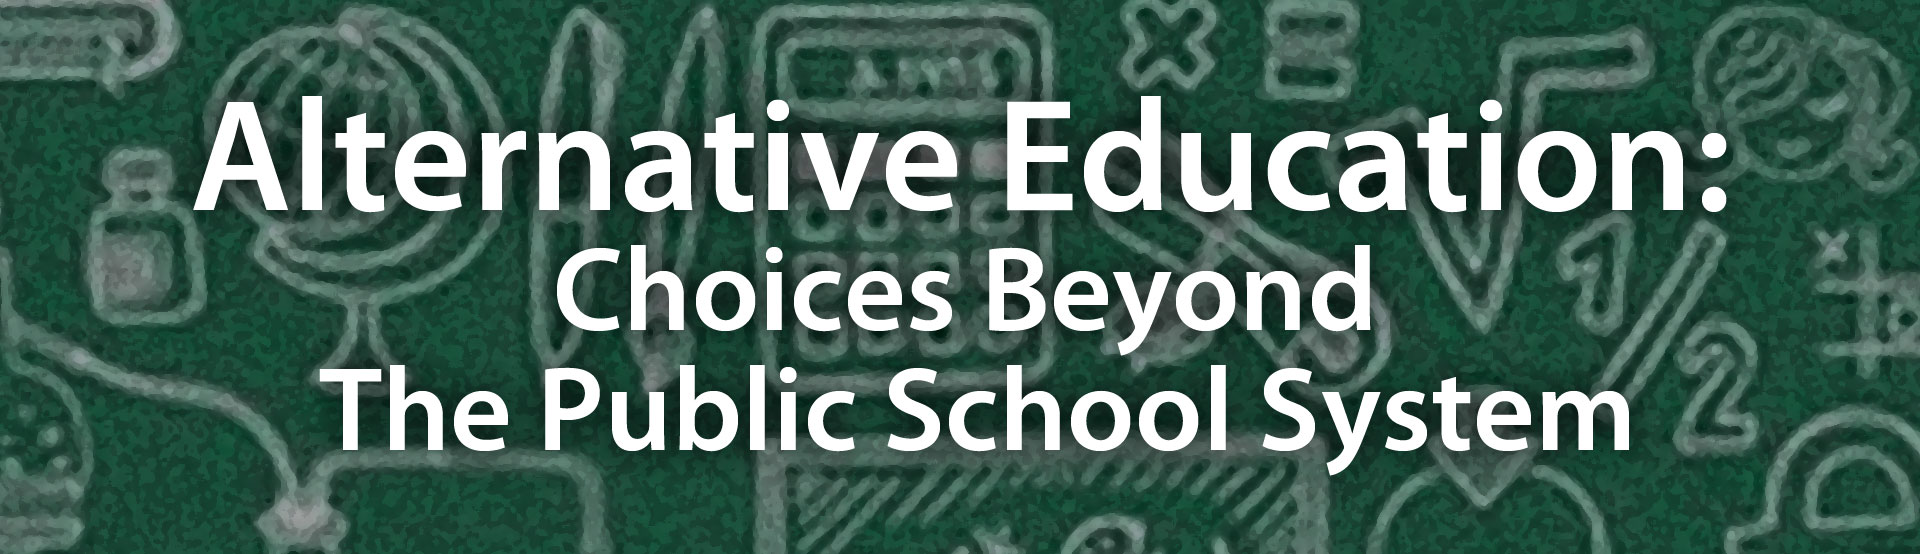 Alternative Education: Choices Beyond The Public School System